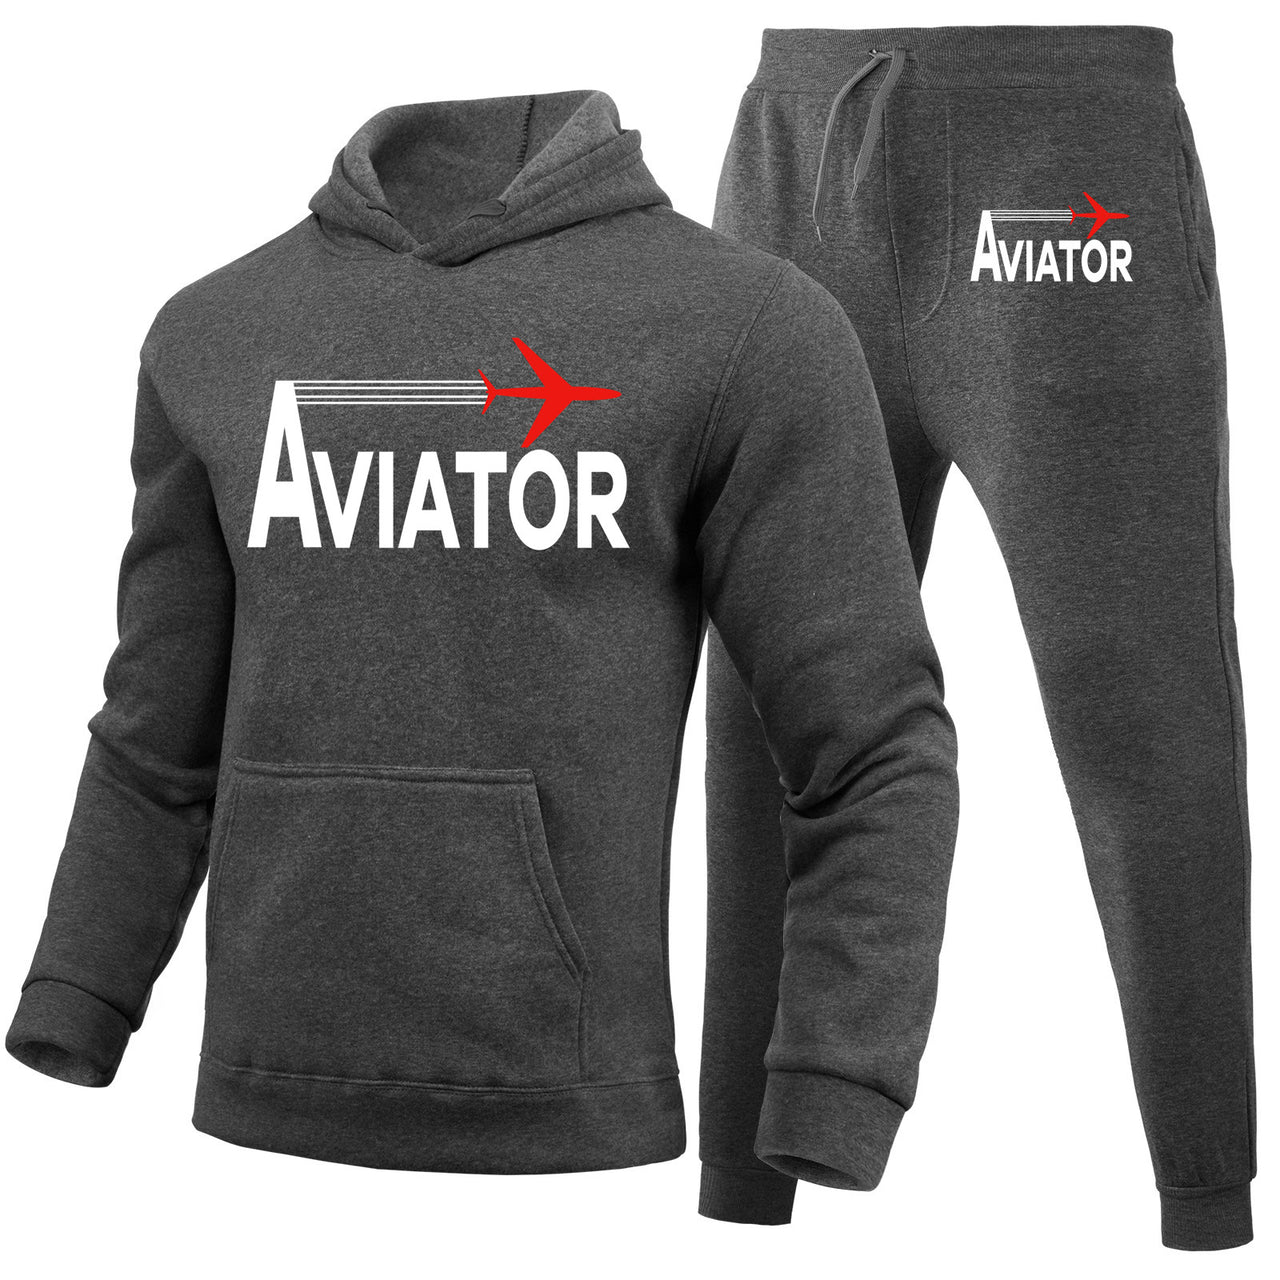 Aviator Designed Hoodies & Sweatpants Set